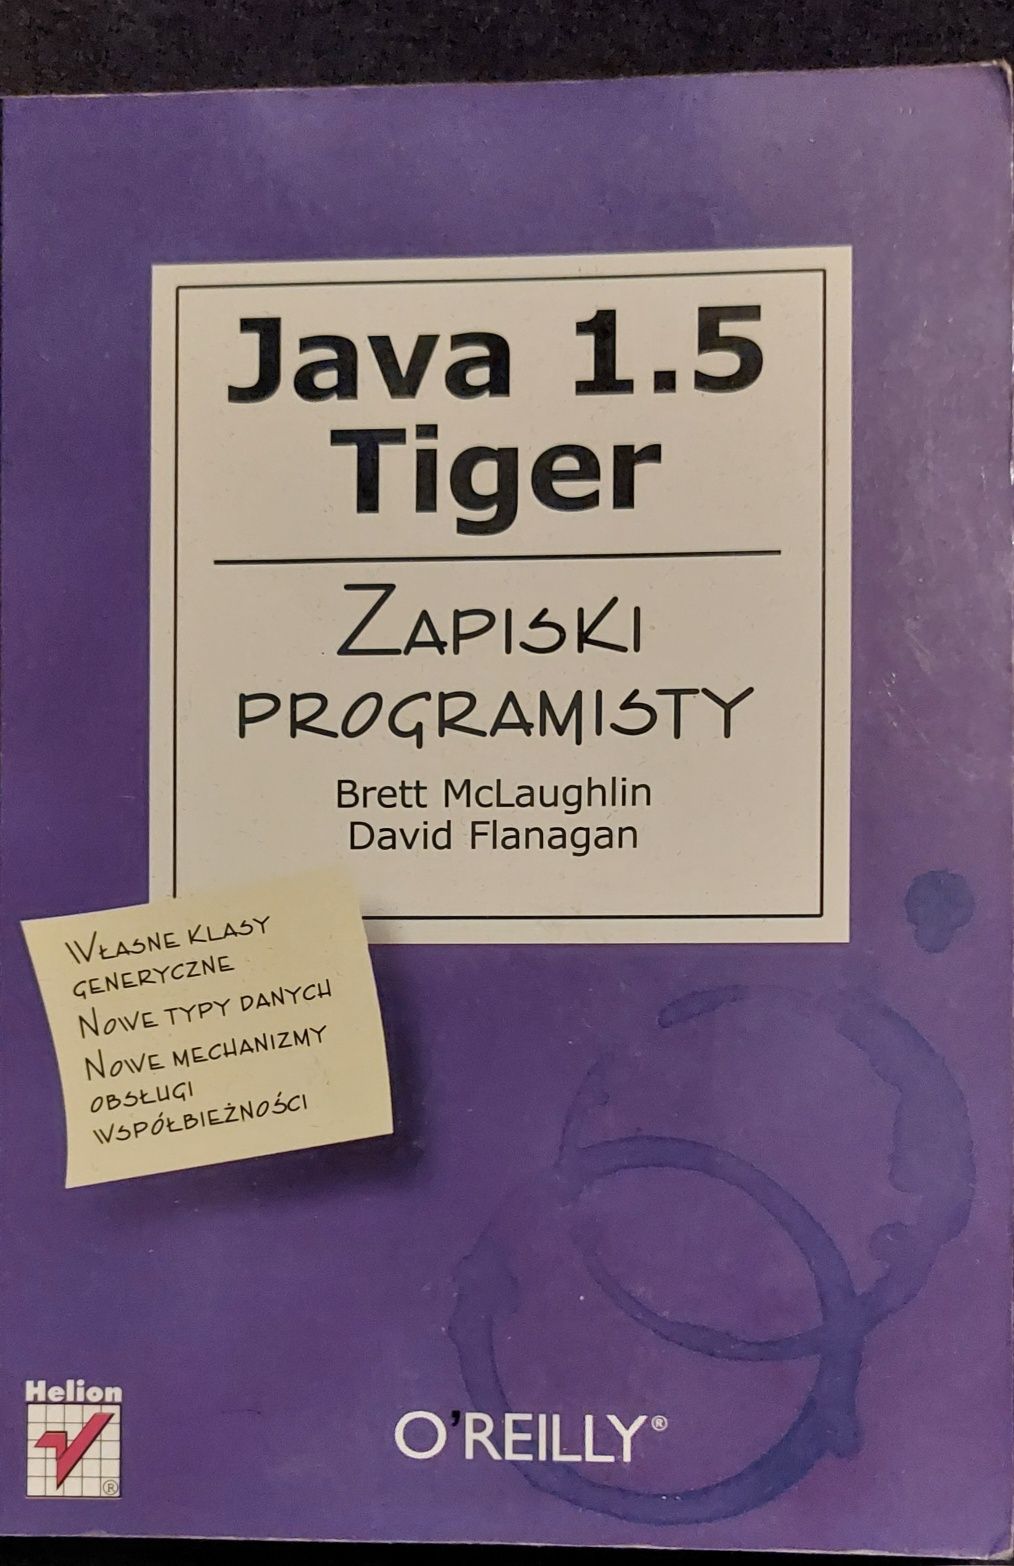 Java 1.5 TIGER -zapiski programisty, O'Relly